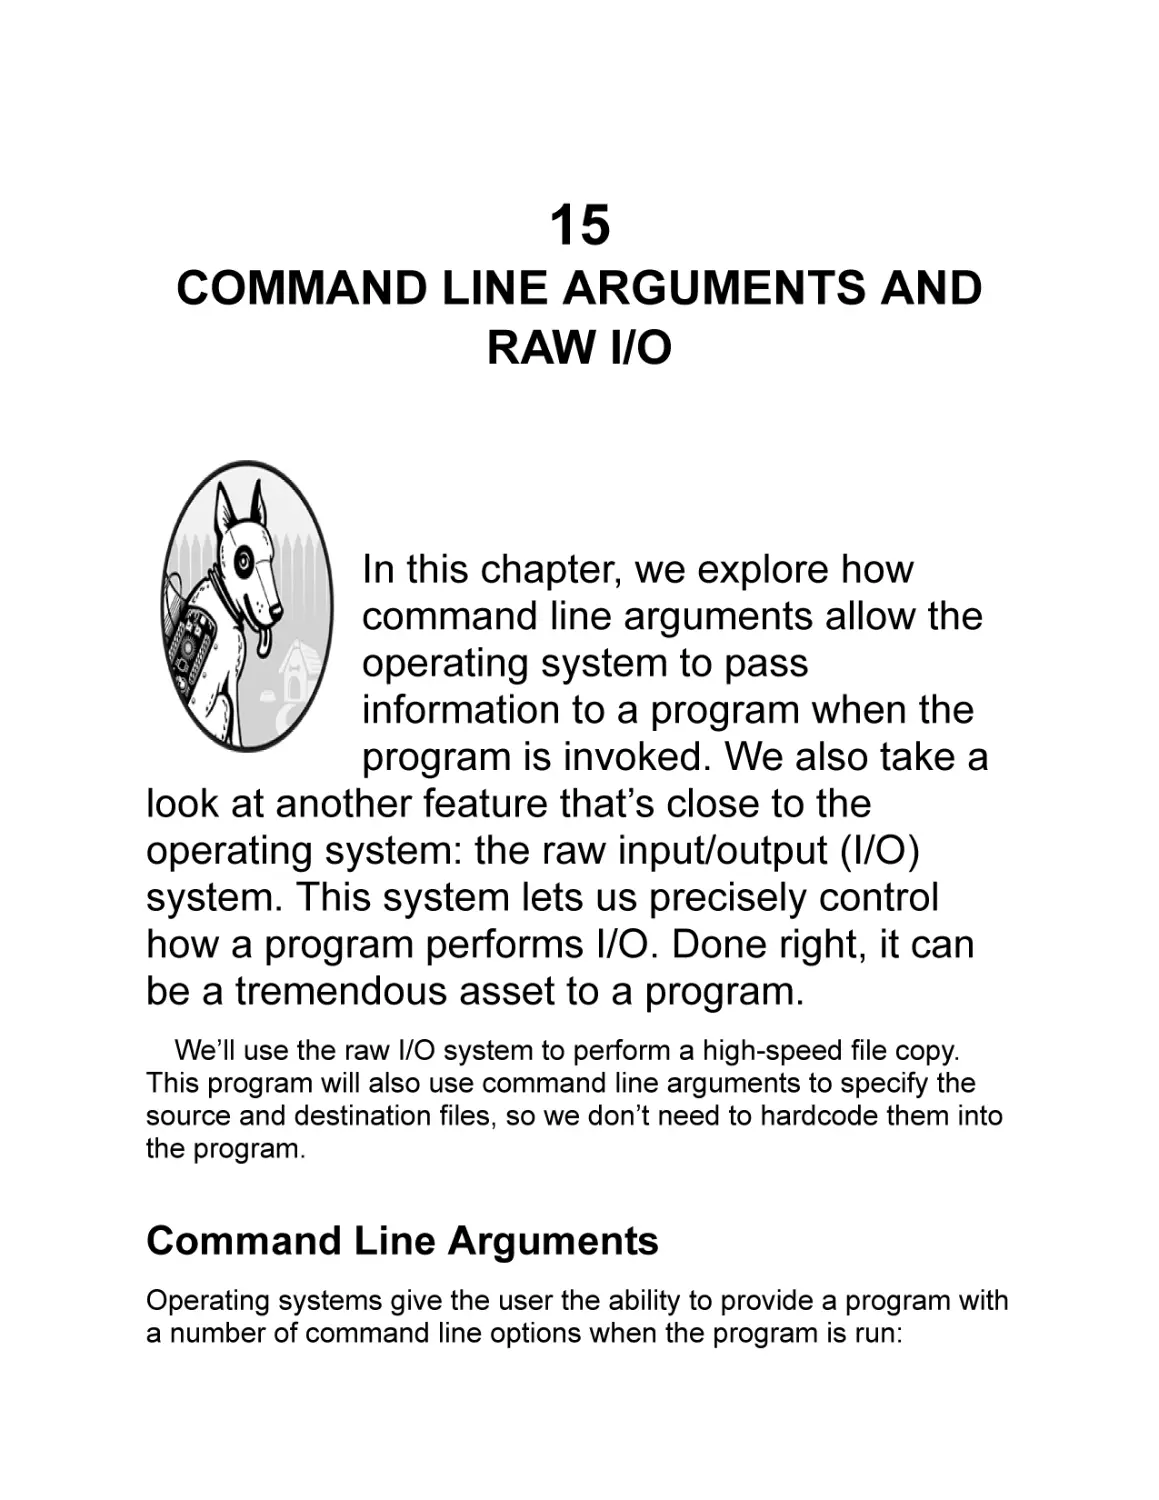 Chapter 15
Command Line Arguments